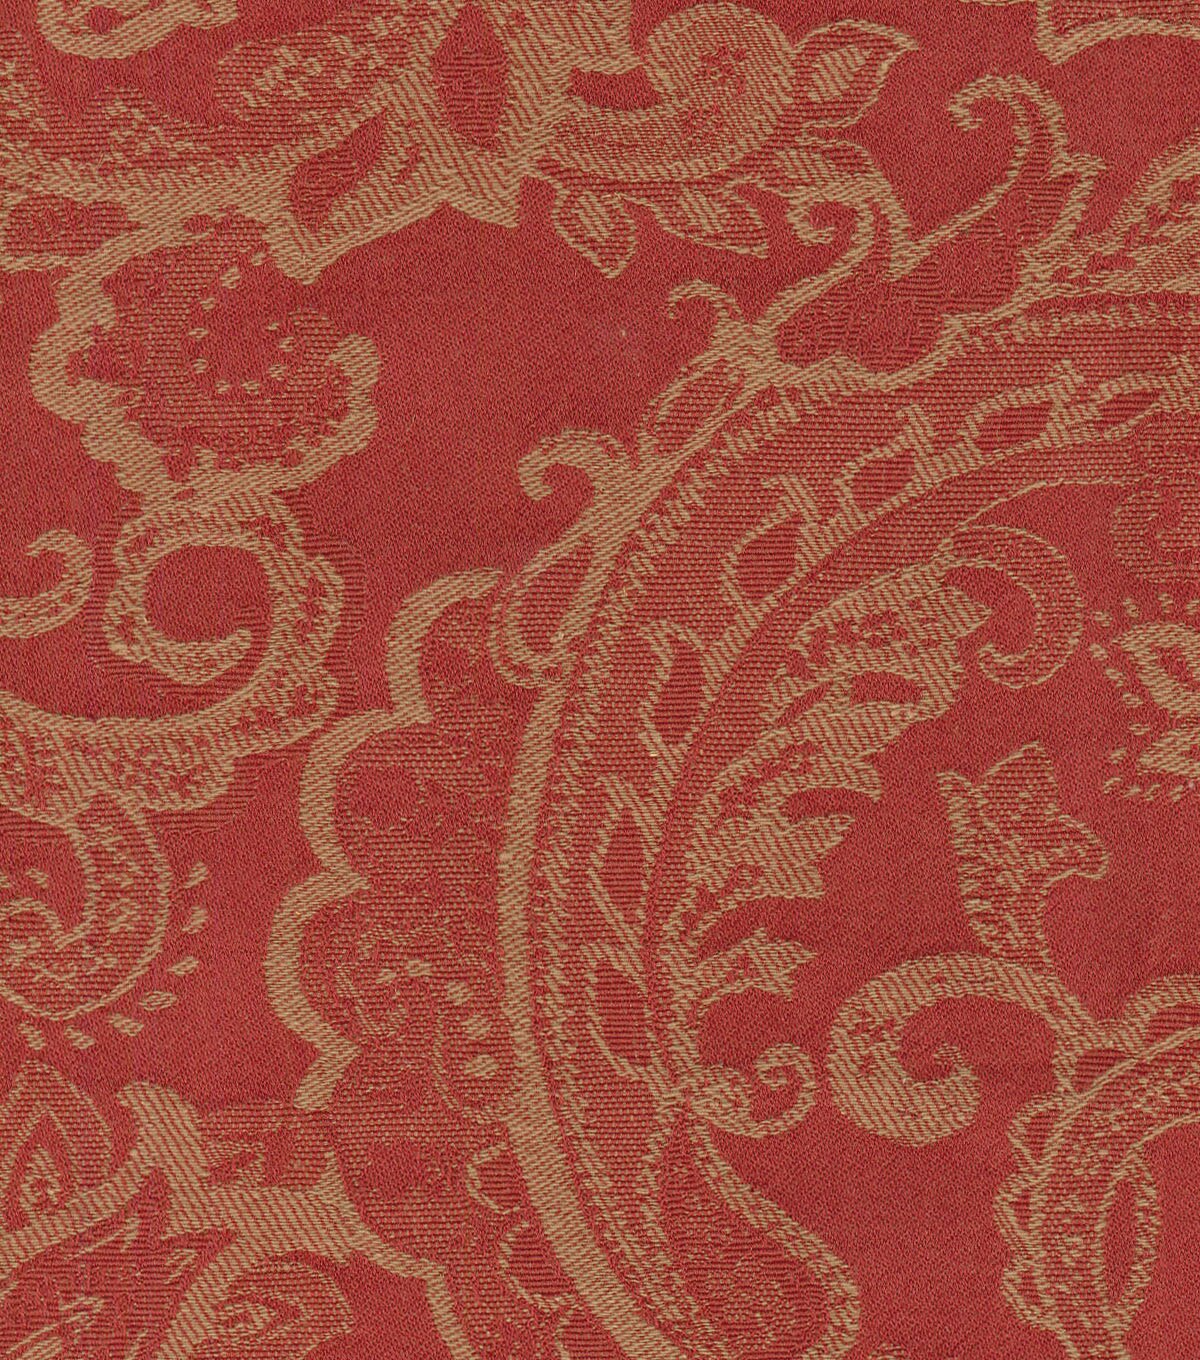 Waverly Upholstery Fabric 54